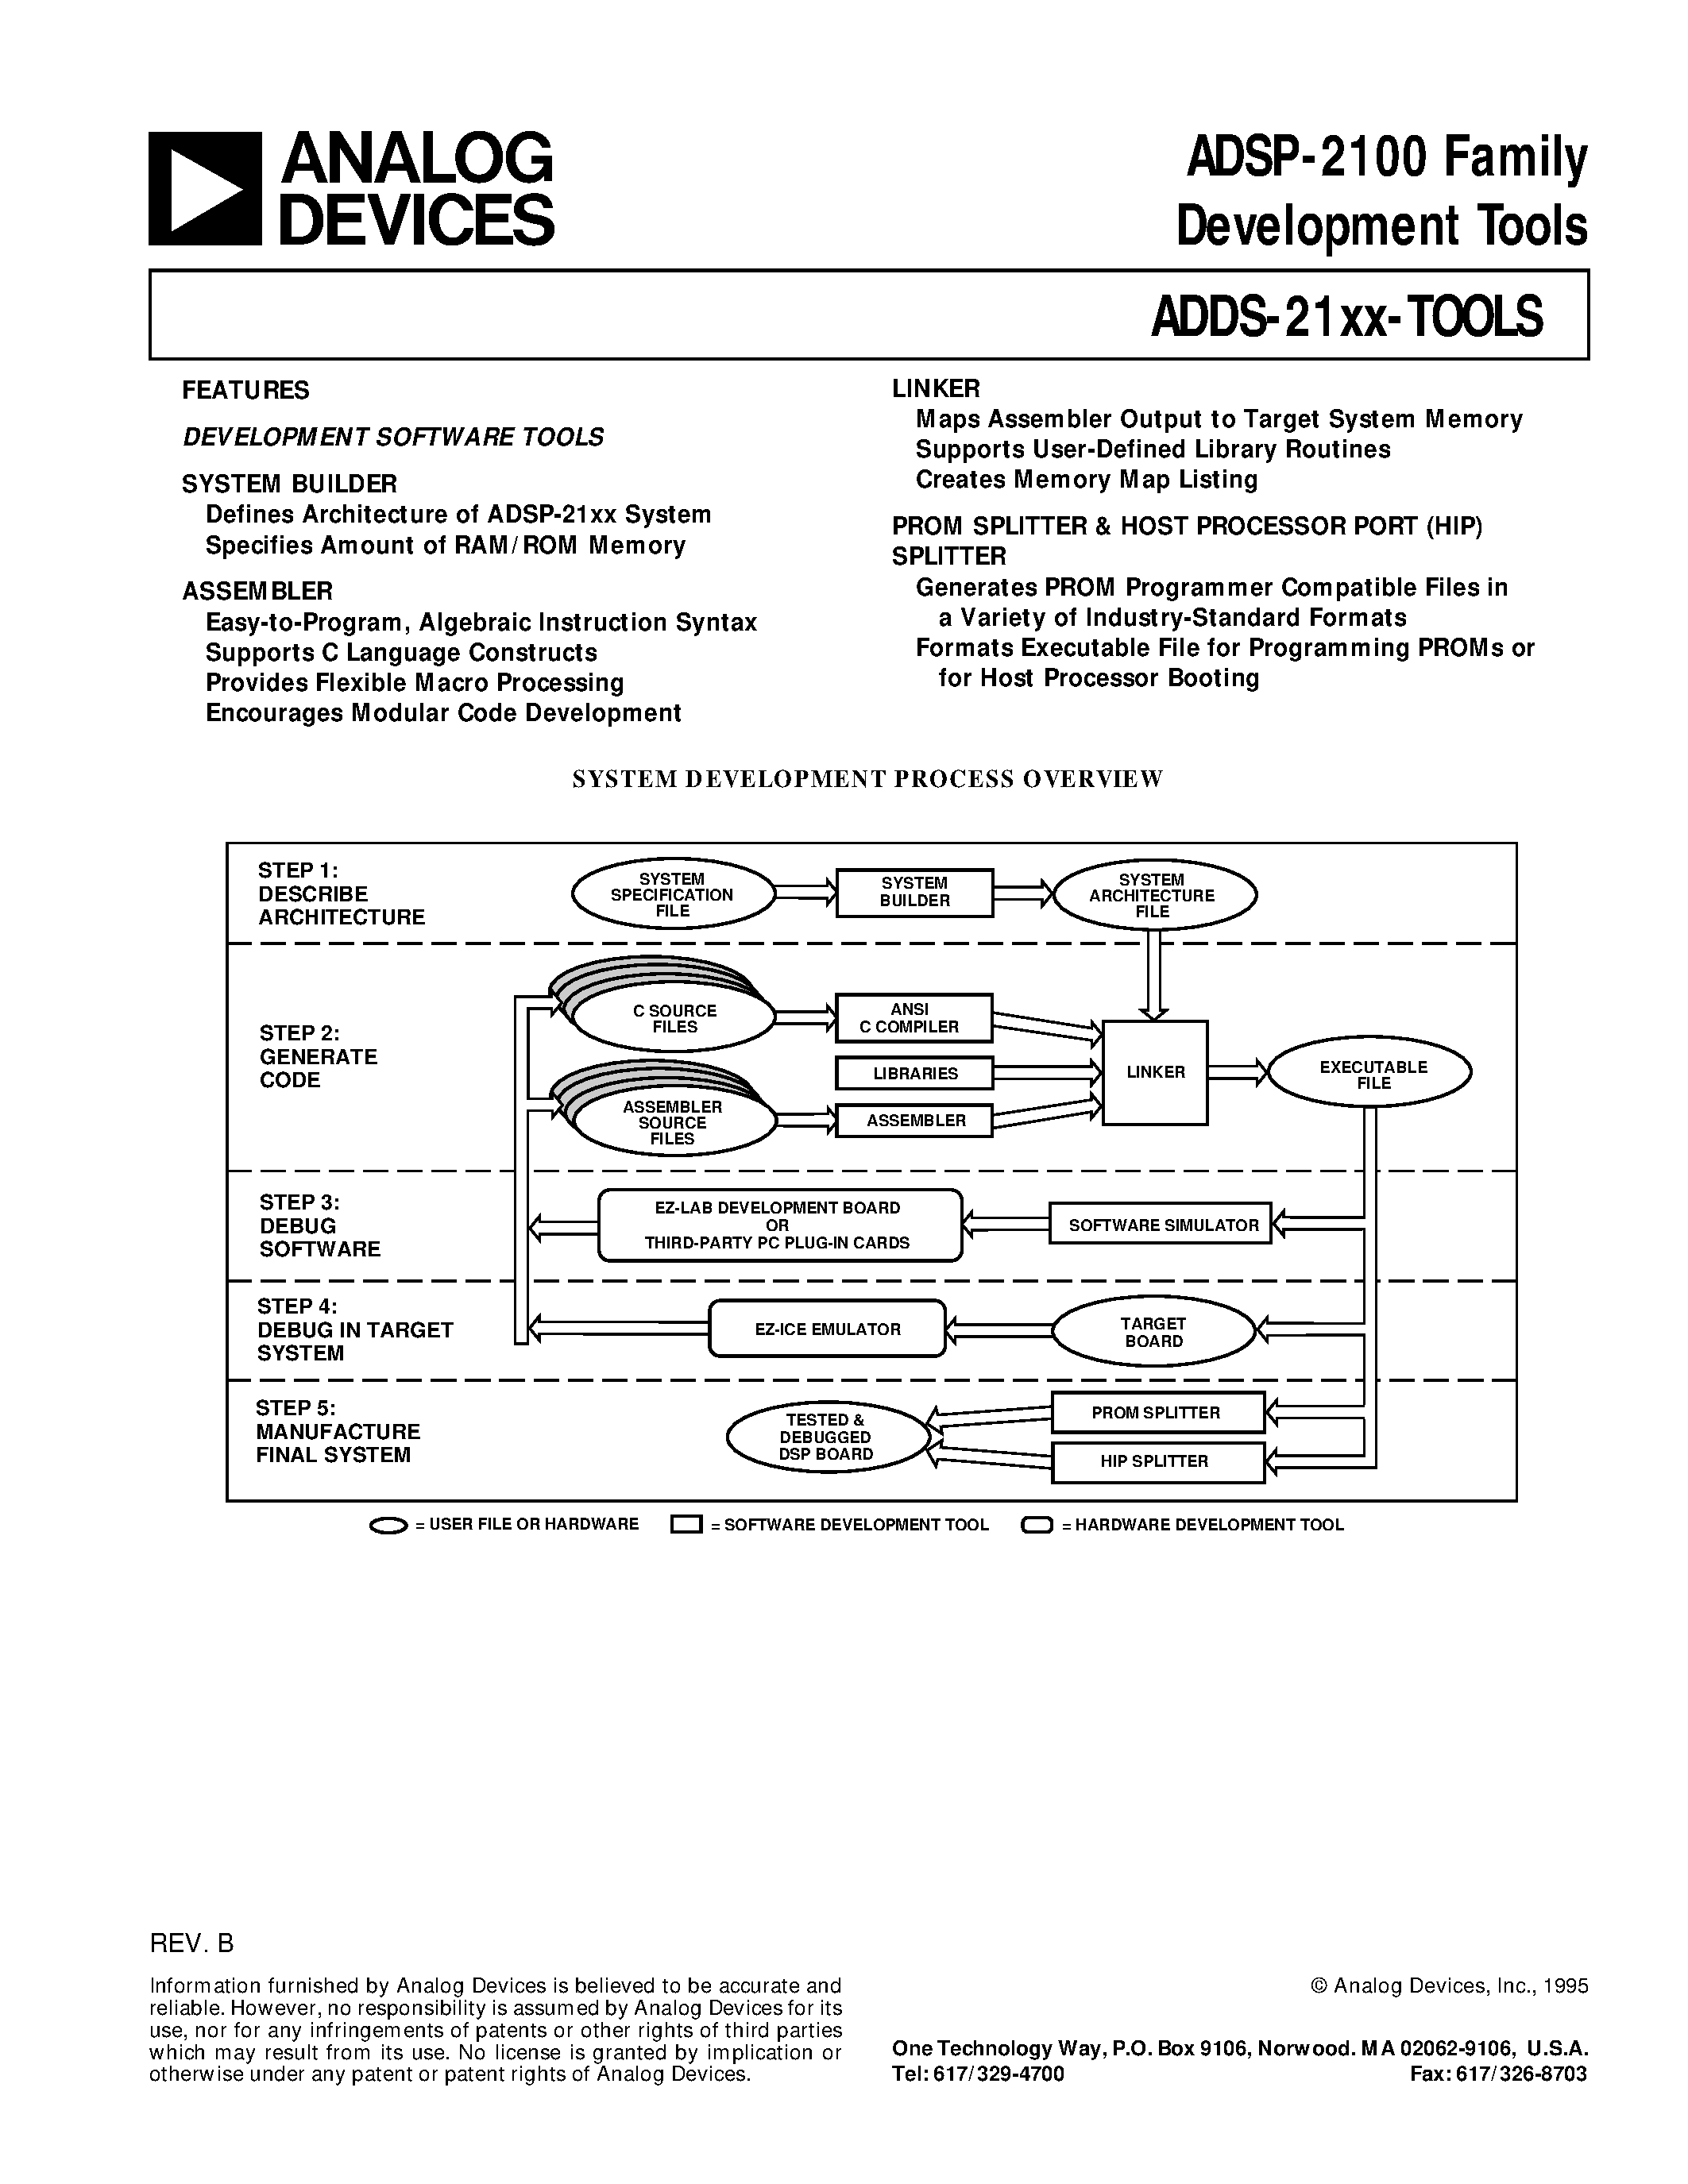 Даташит ADDS-2101-EZ-ICE - ADSP-2100 Family Development Tools страница 1